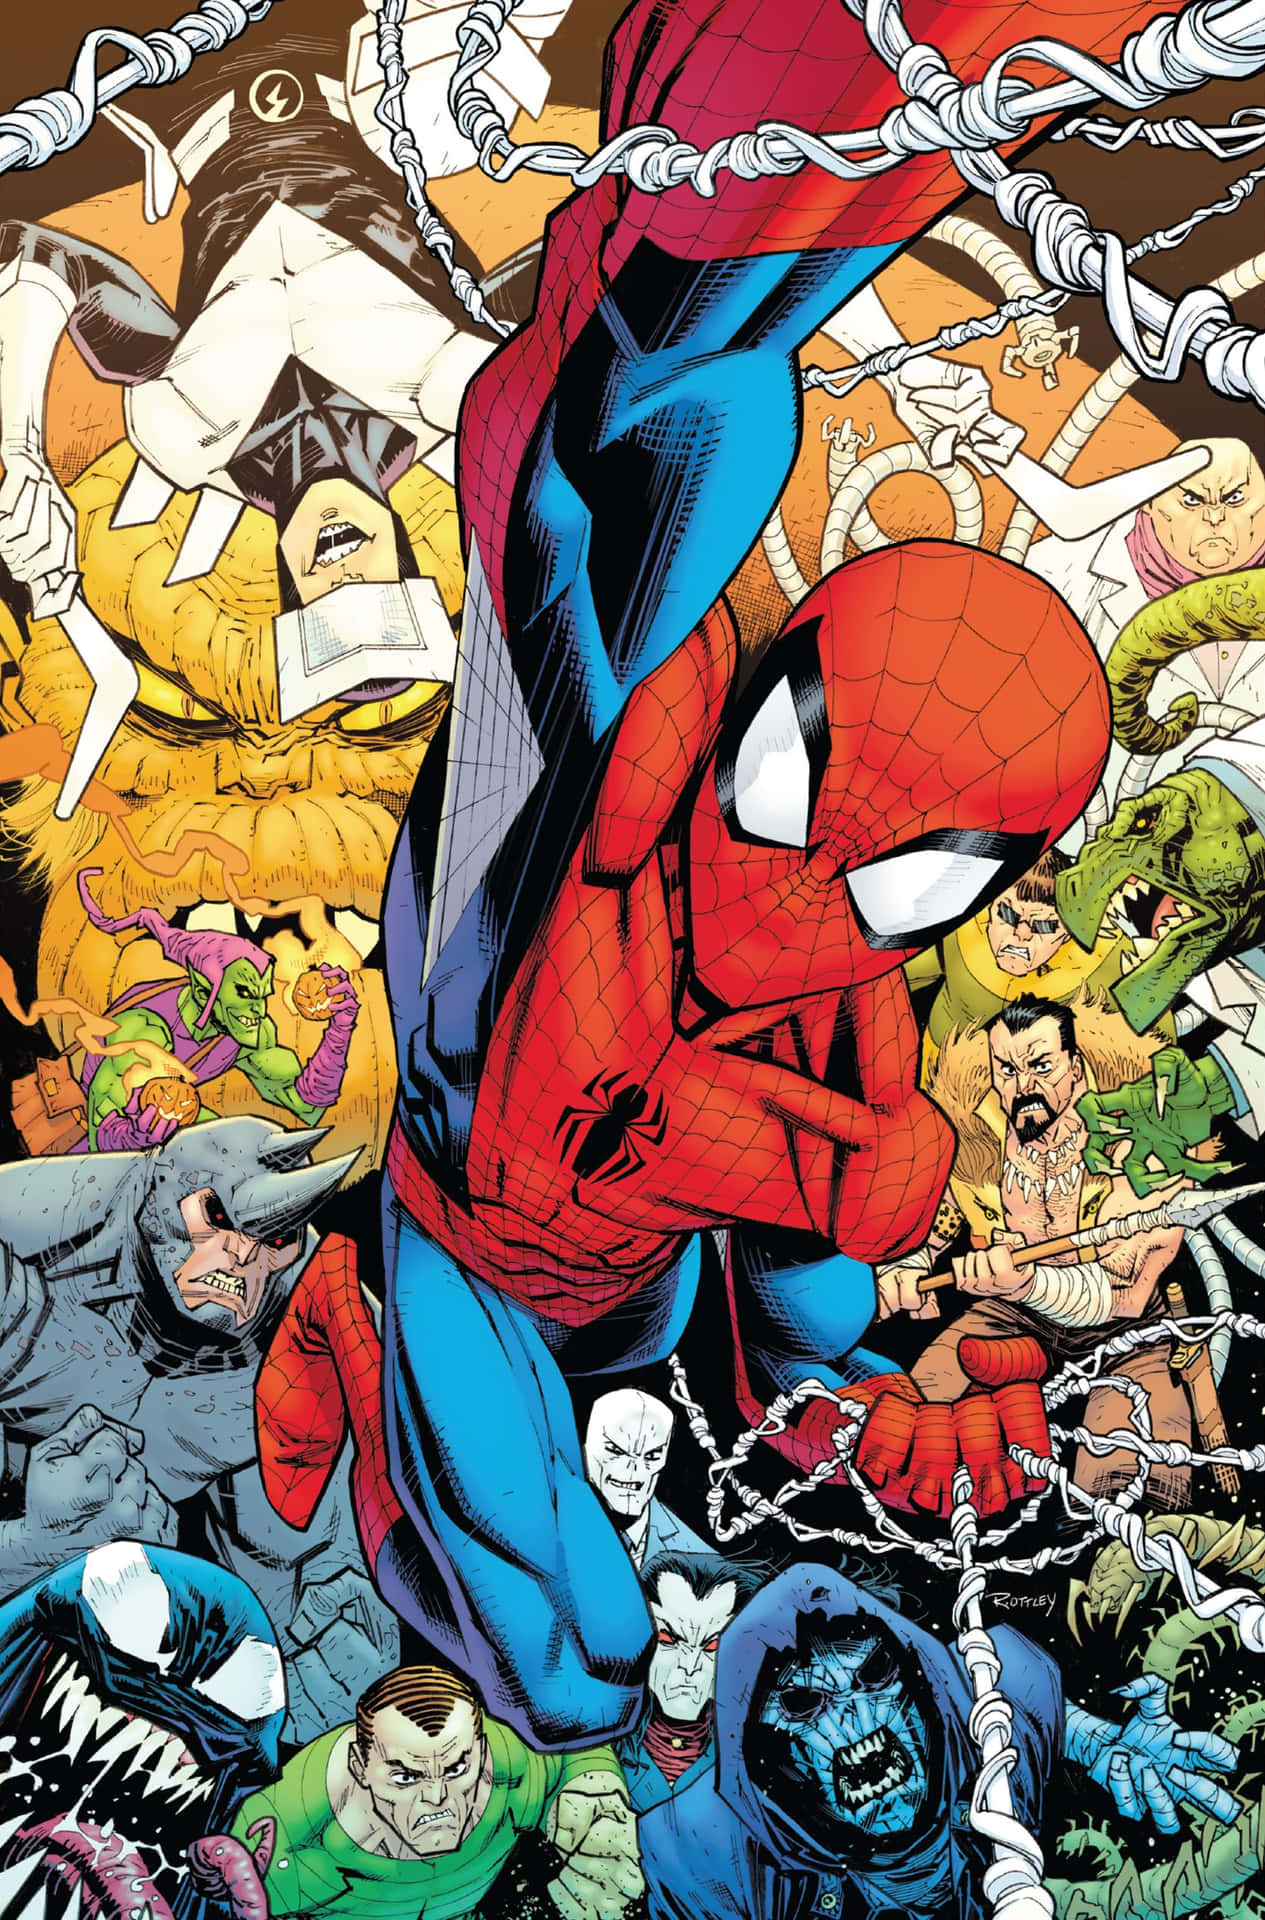 Spider-man Swinging Through Marvel's New York City! Background